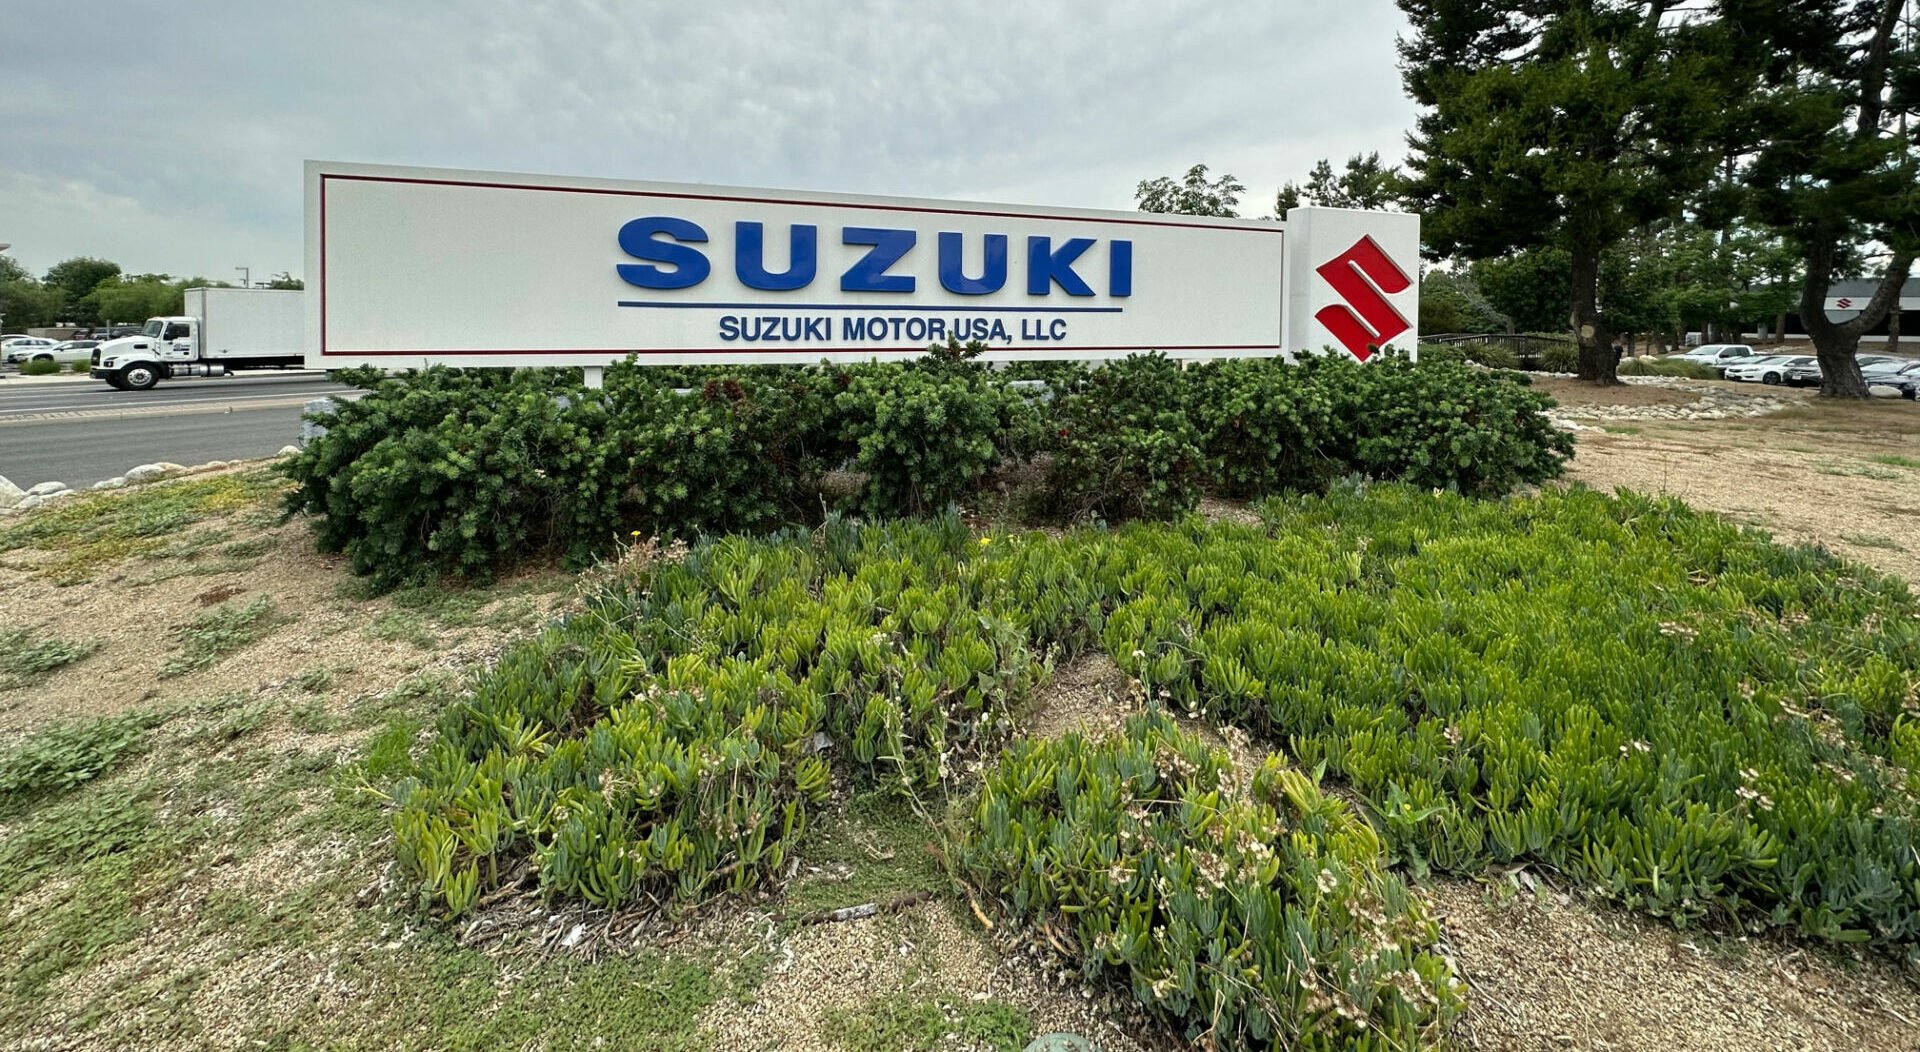 Suzuki Motor USA, LLC headquarters in Brea, California. Photo courtesy Suzuki Motor USA, LLC.